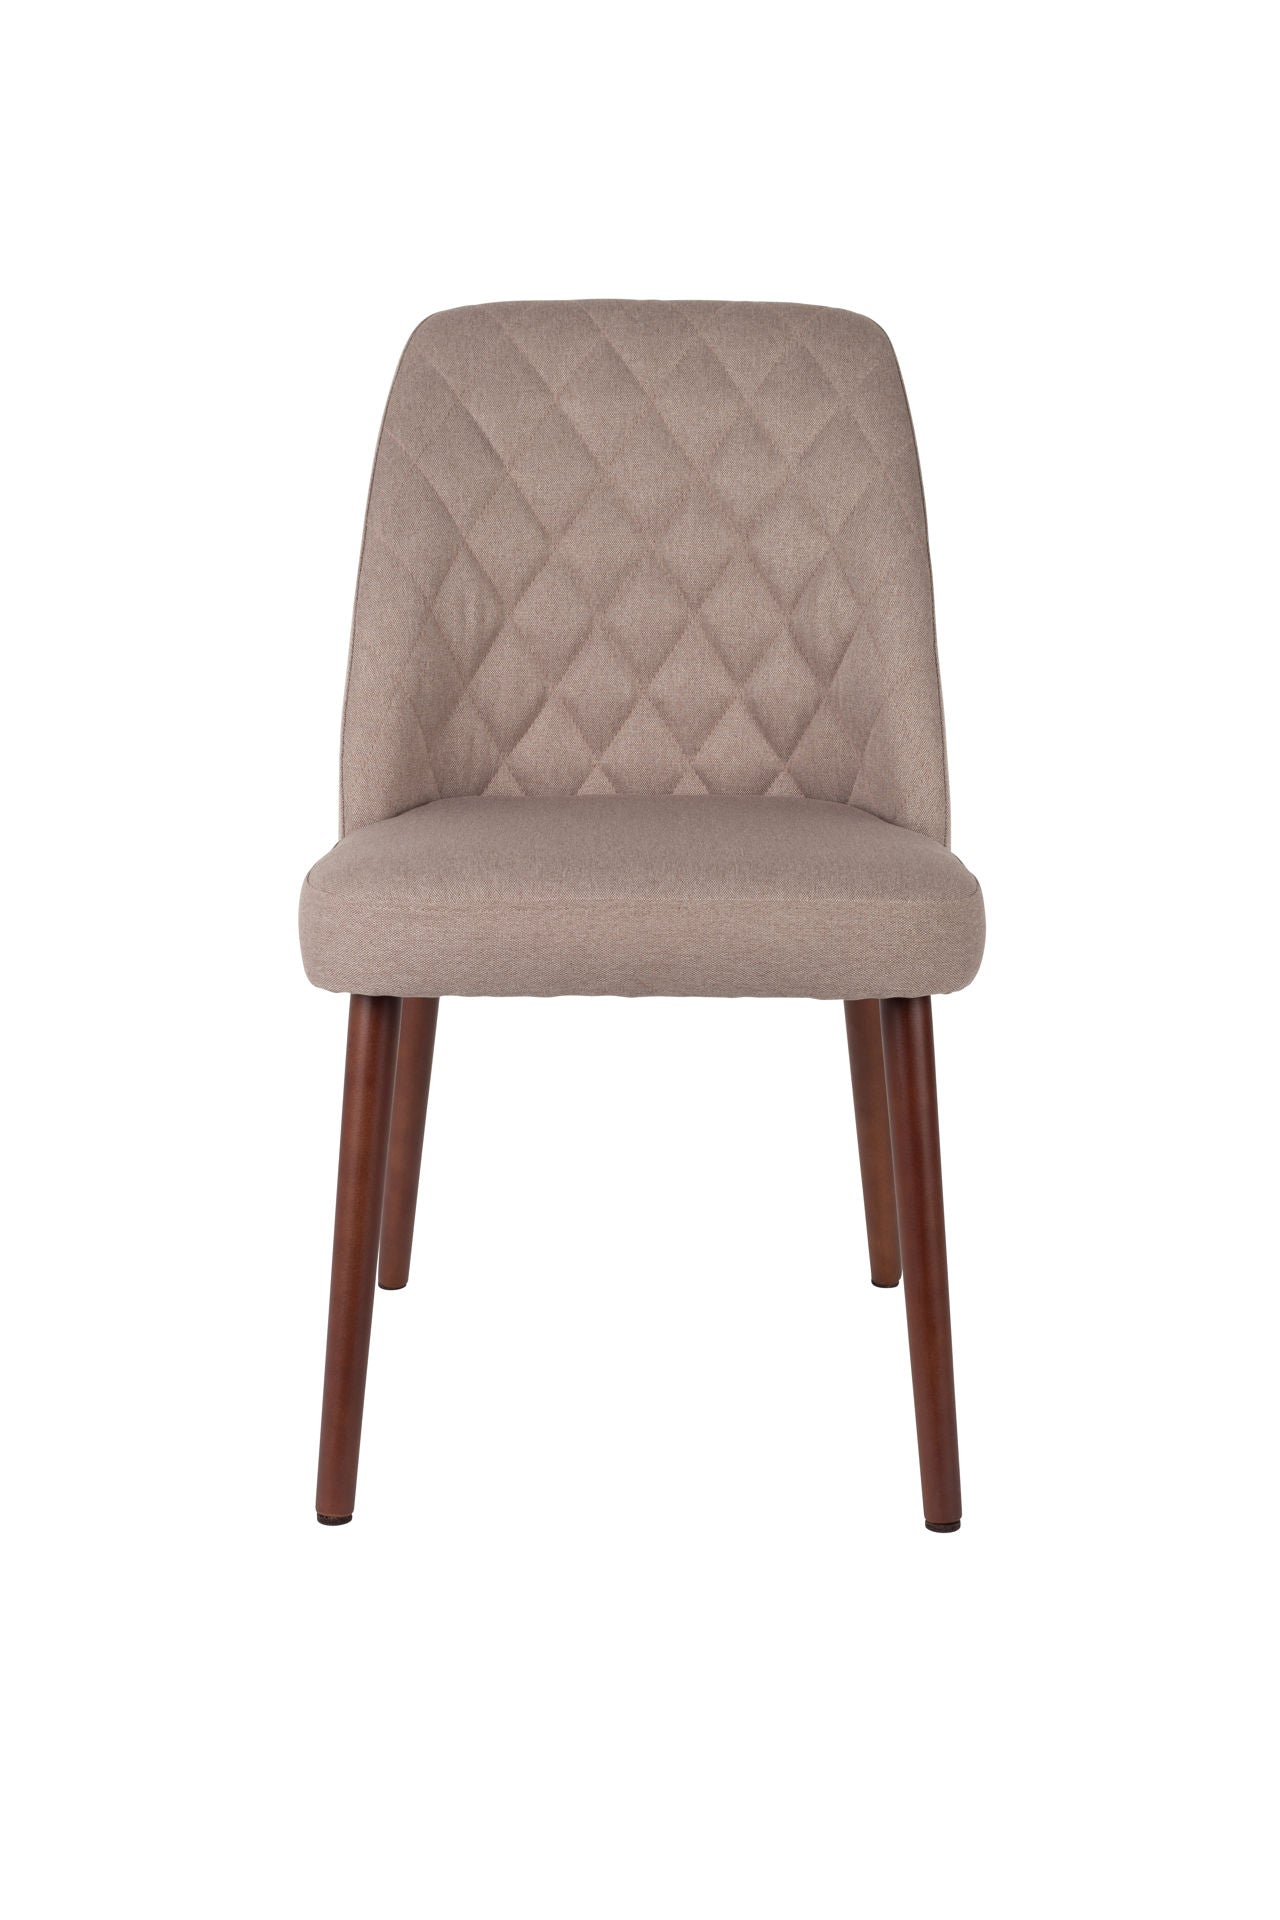 Nancy's Canonsburg Chair - Retro - Beige, Brown - Polyester, Pu-Foam, Plywood - 56 cm x 48 cm x 85 cm